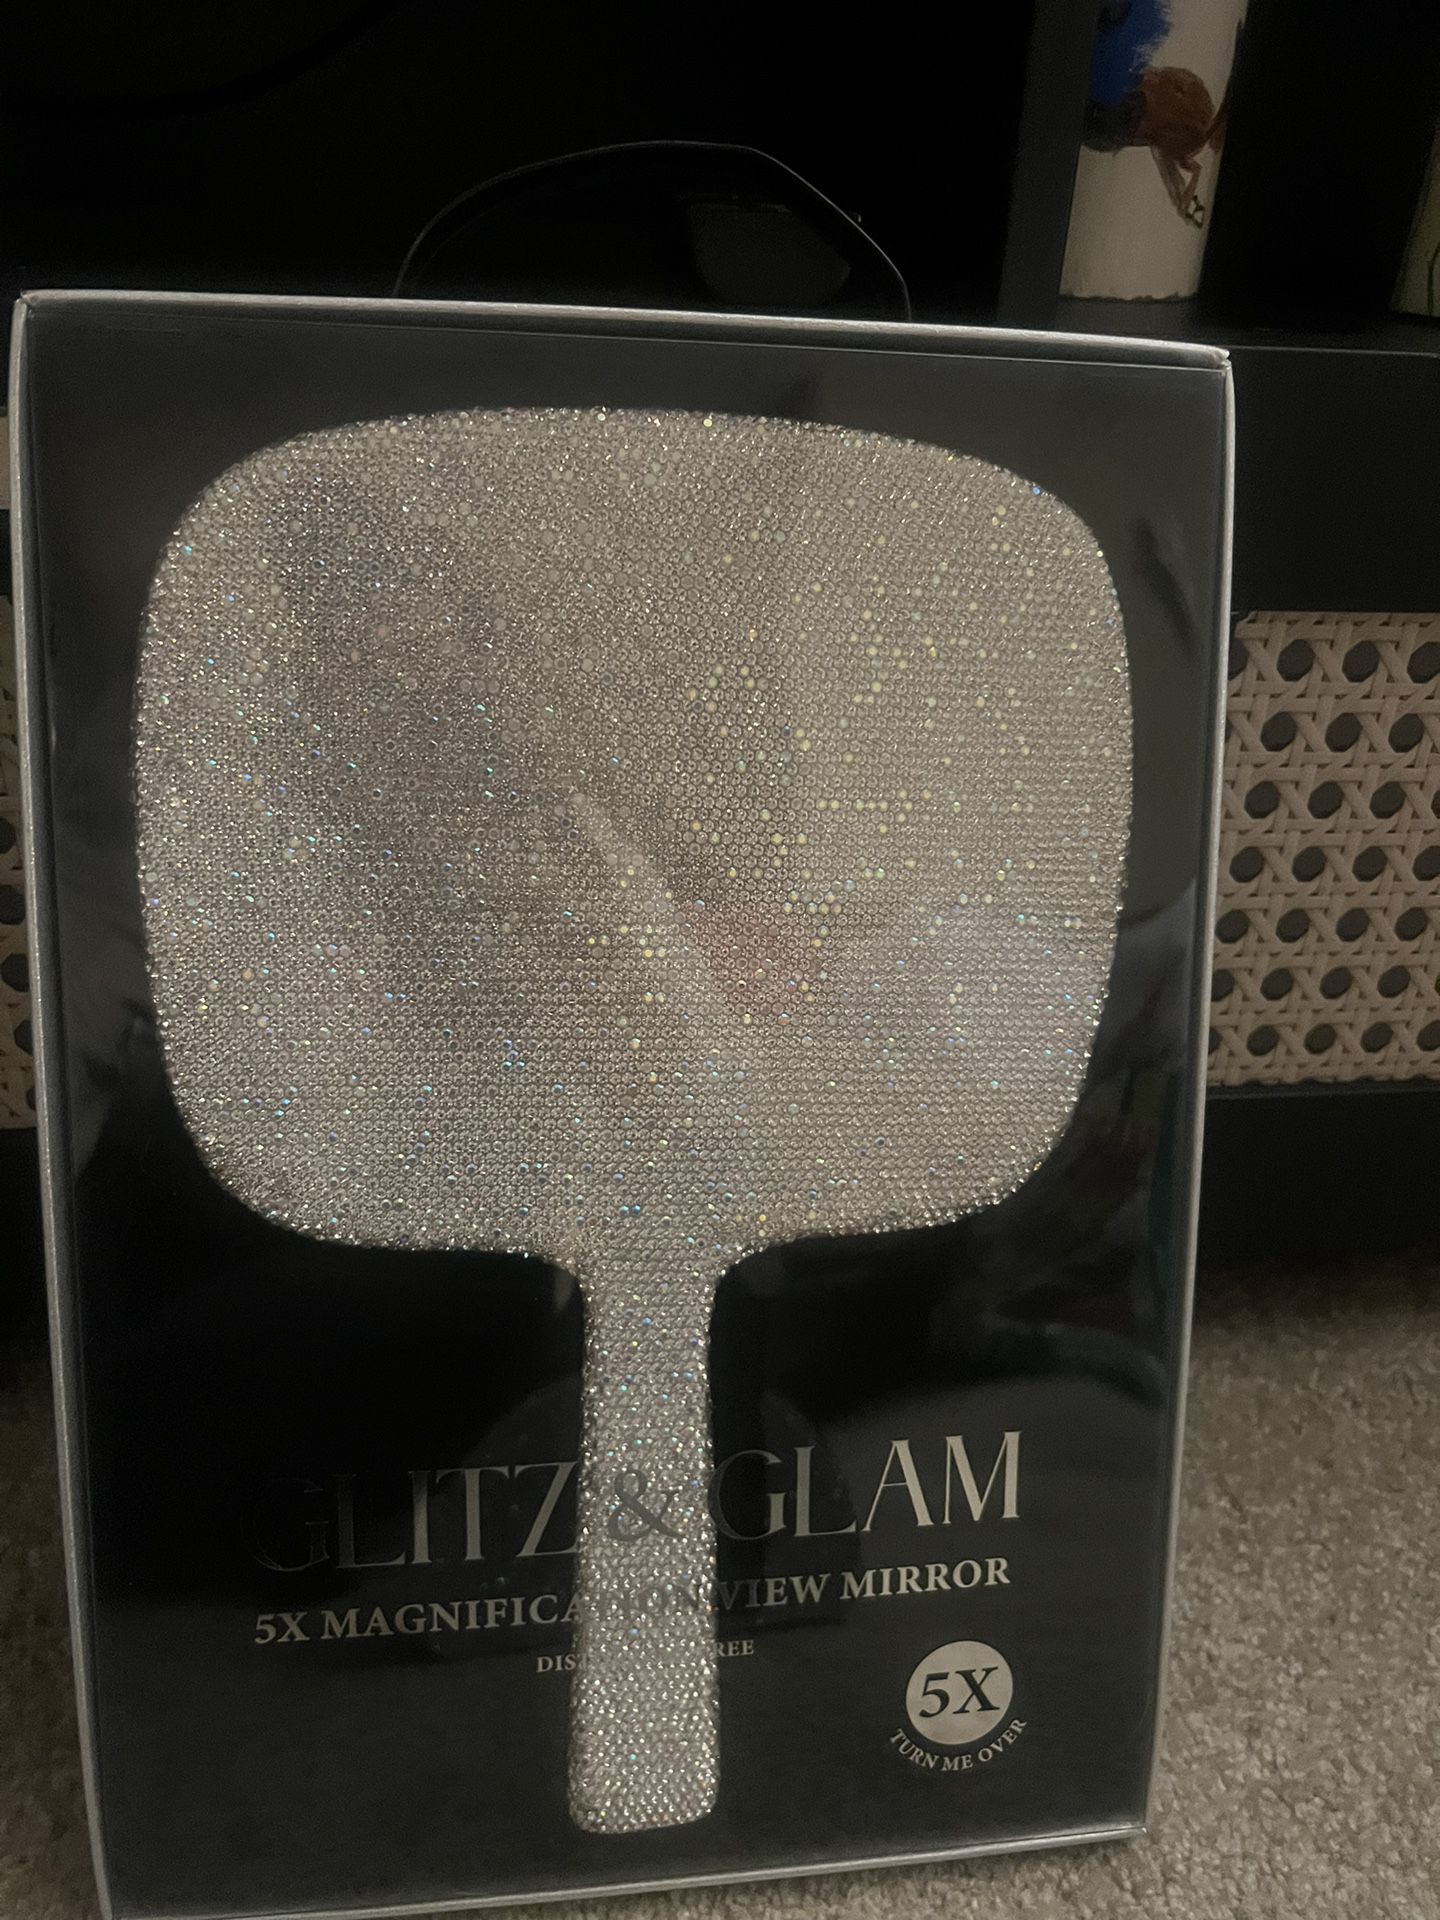 Glitz and glam mirror with matching makeup brush holder tik tok